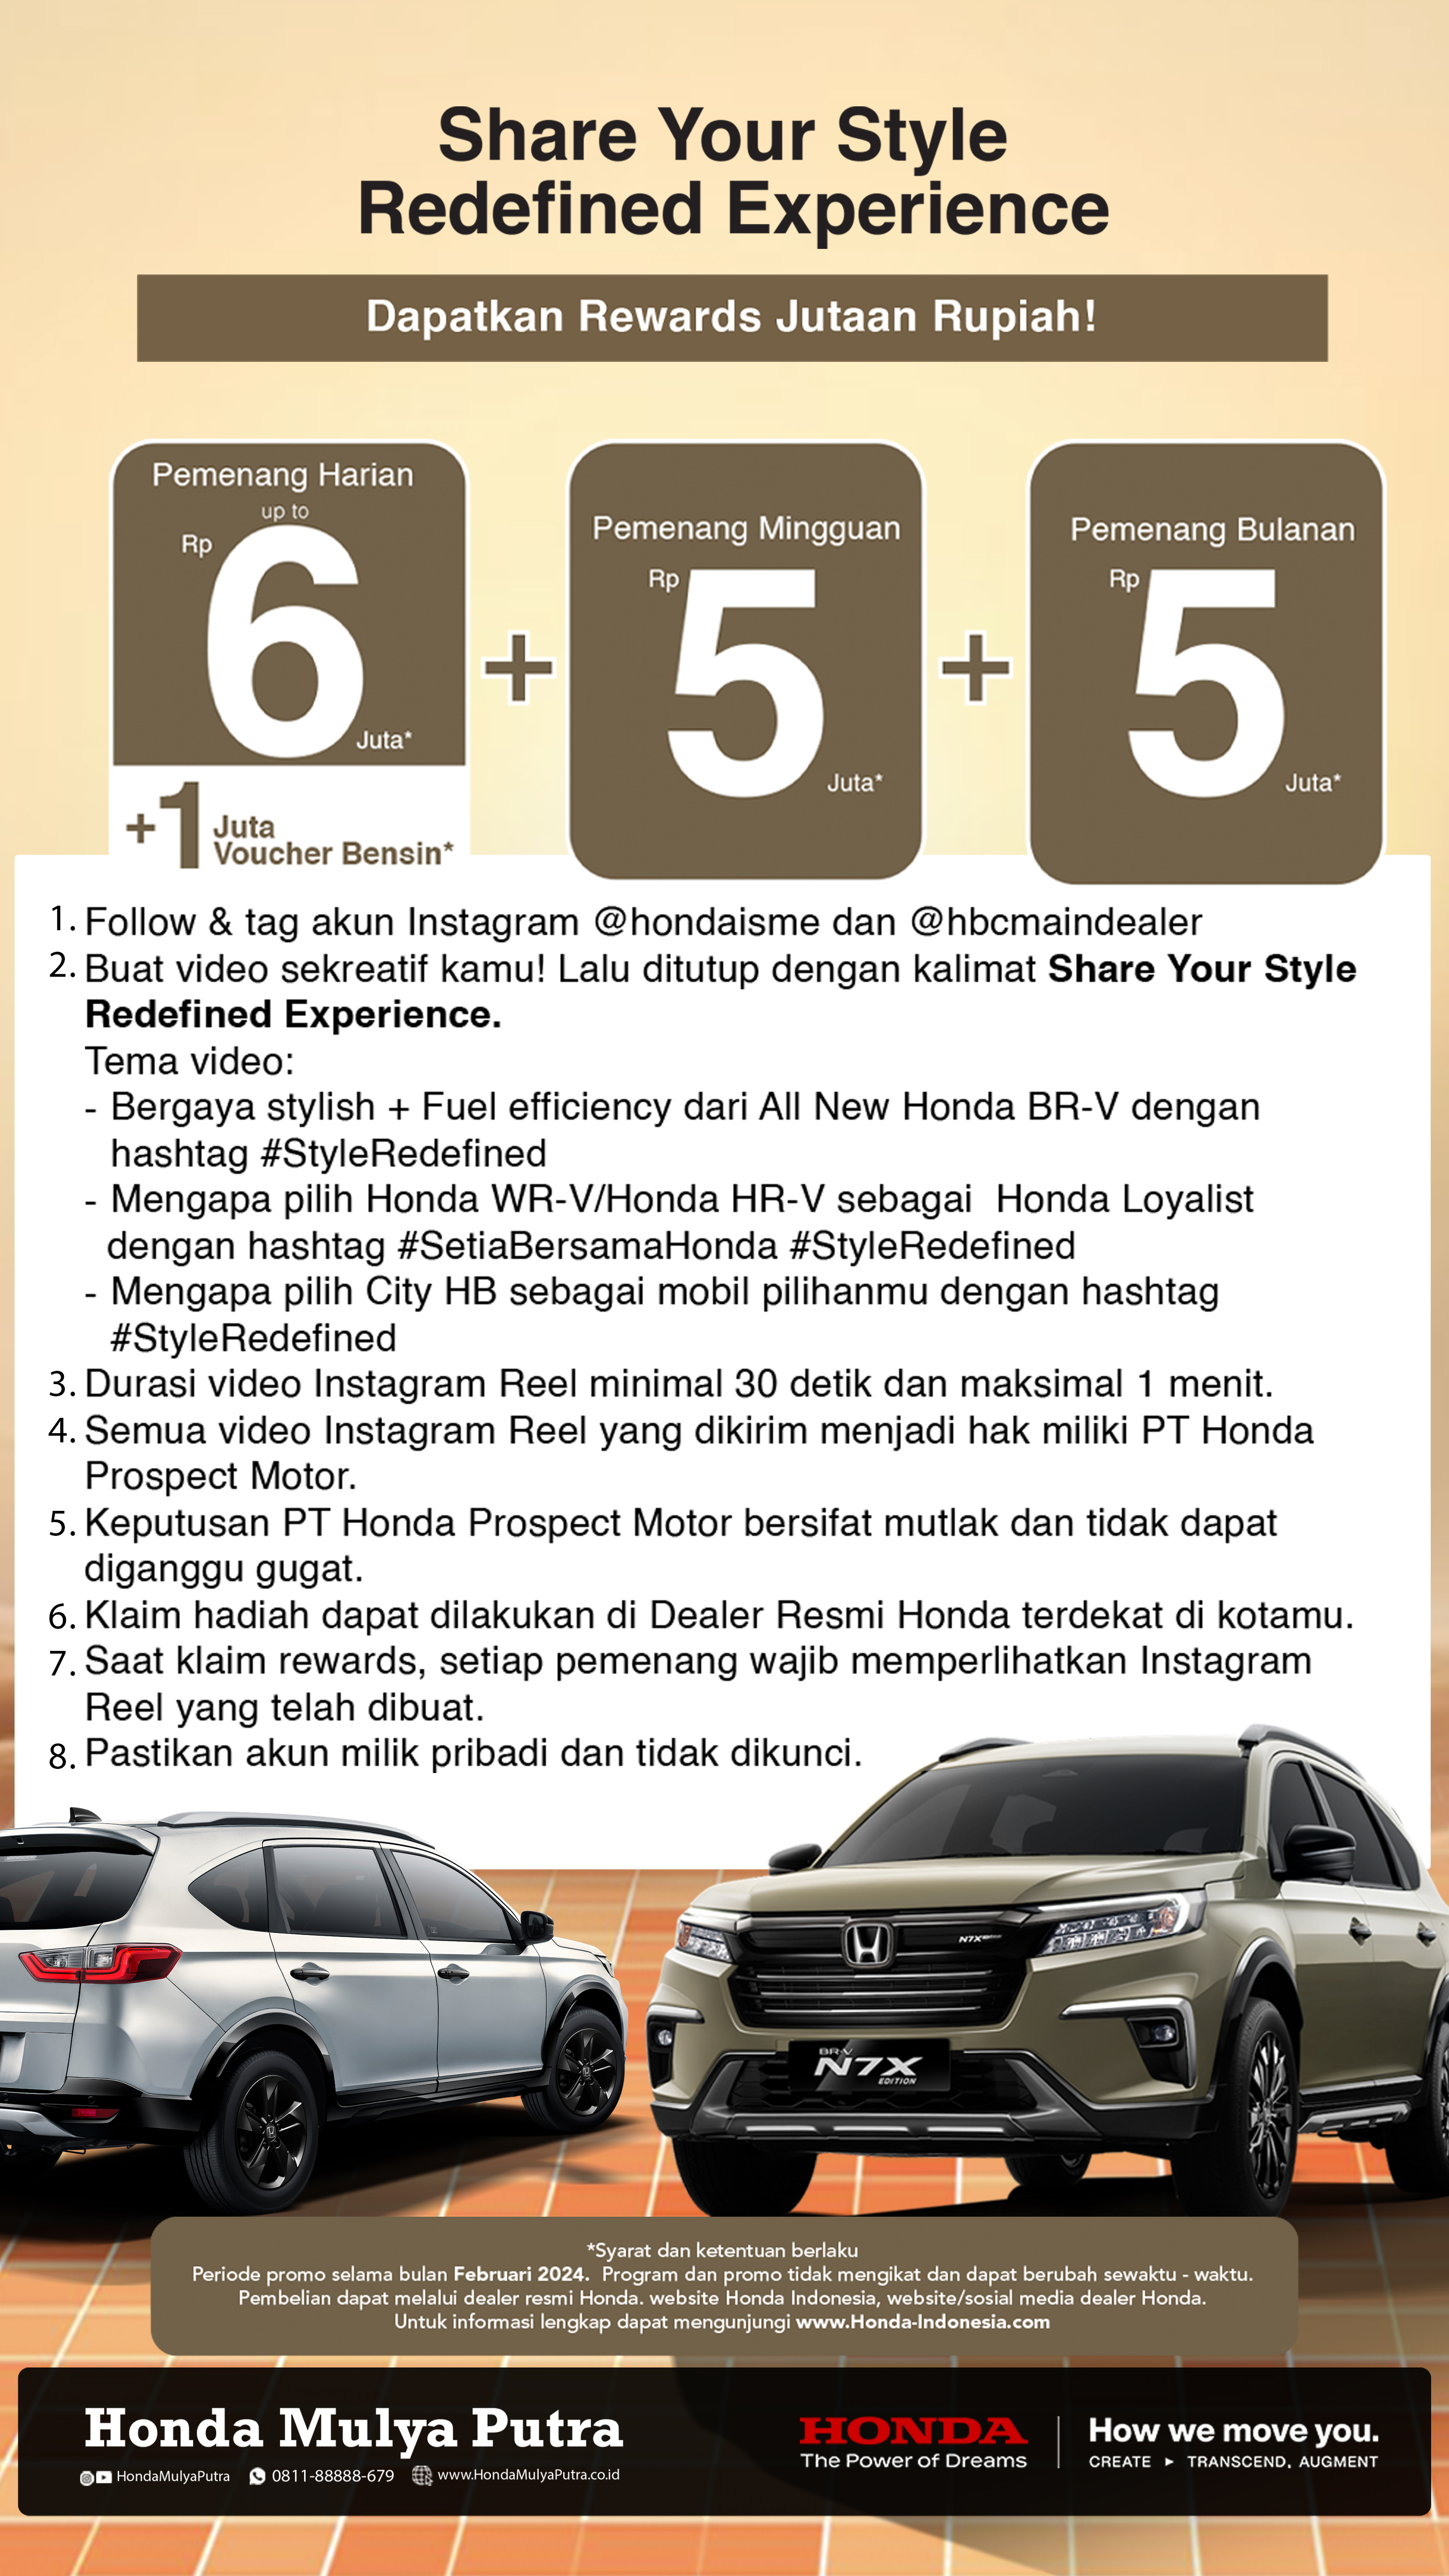 Share Your Style Redefined Experience dan Raih Rewards Jutaan Rupiah Bersama Honda!!